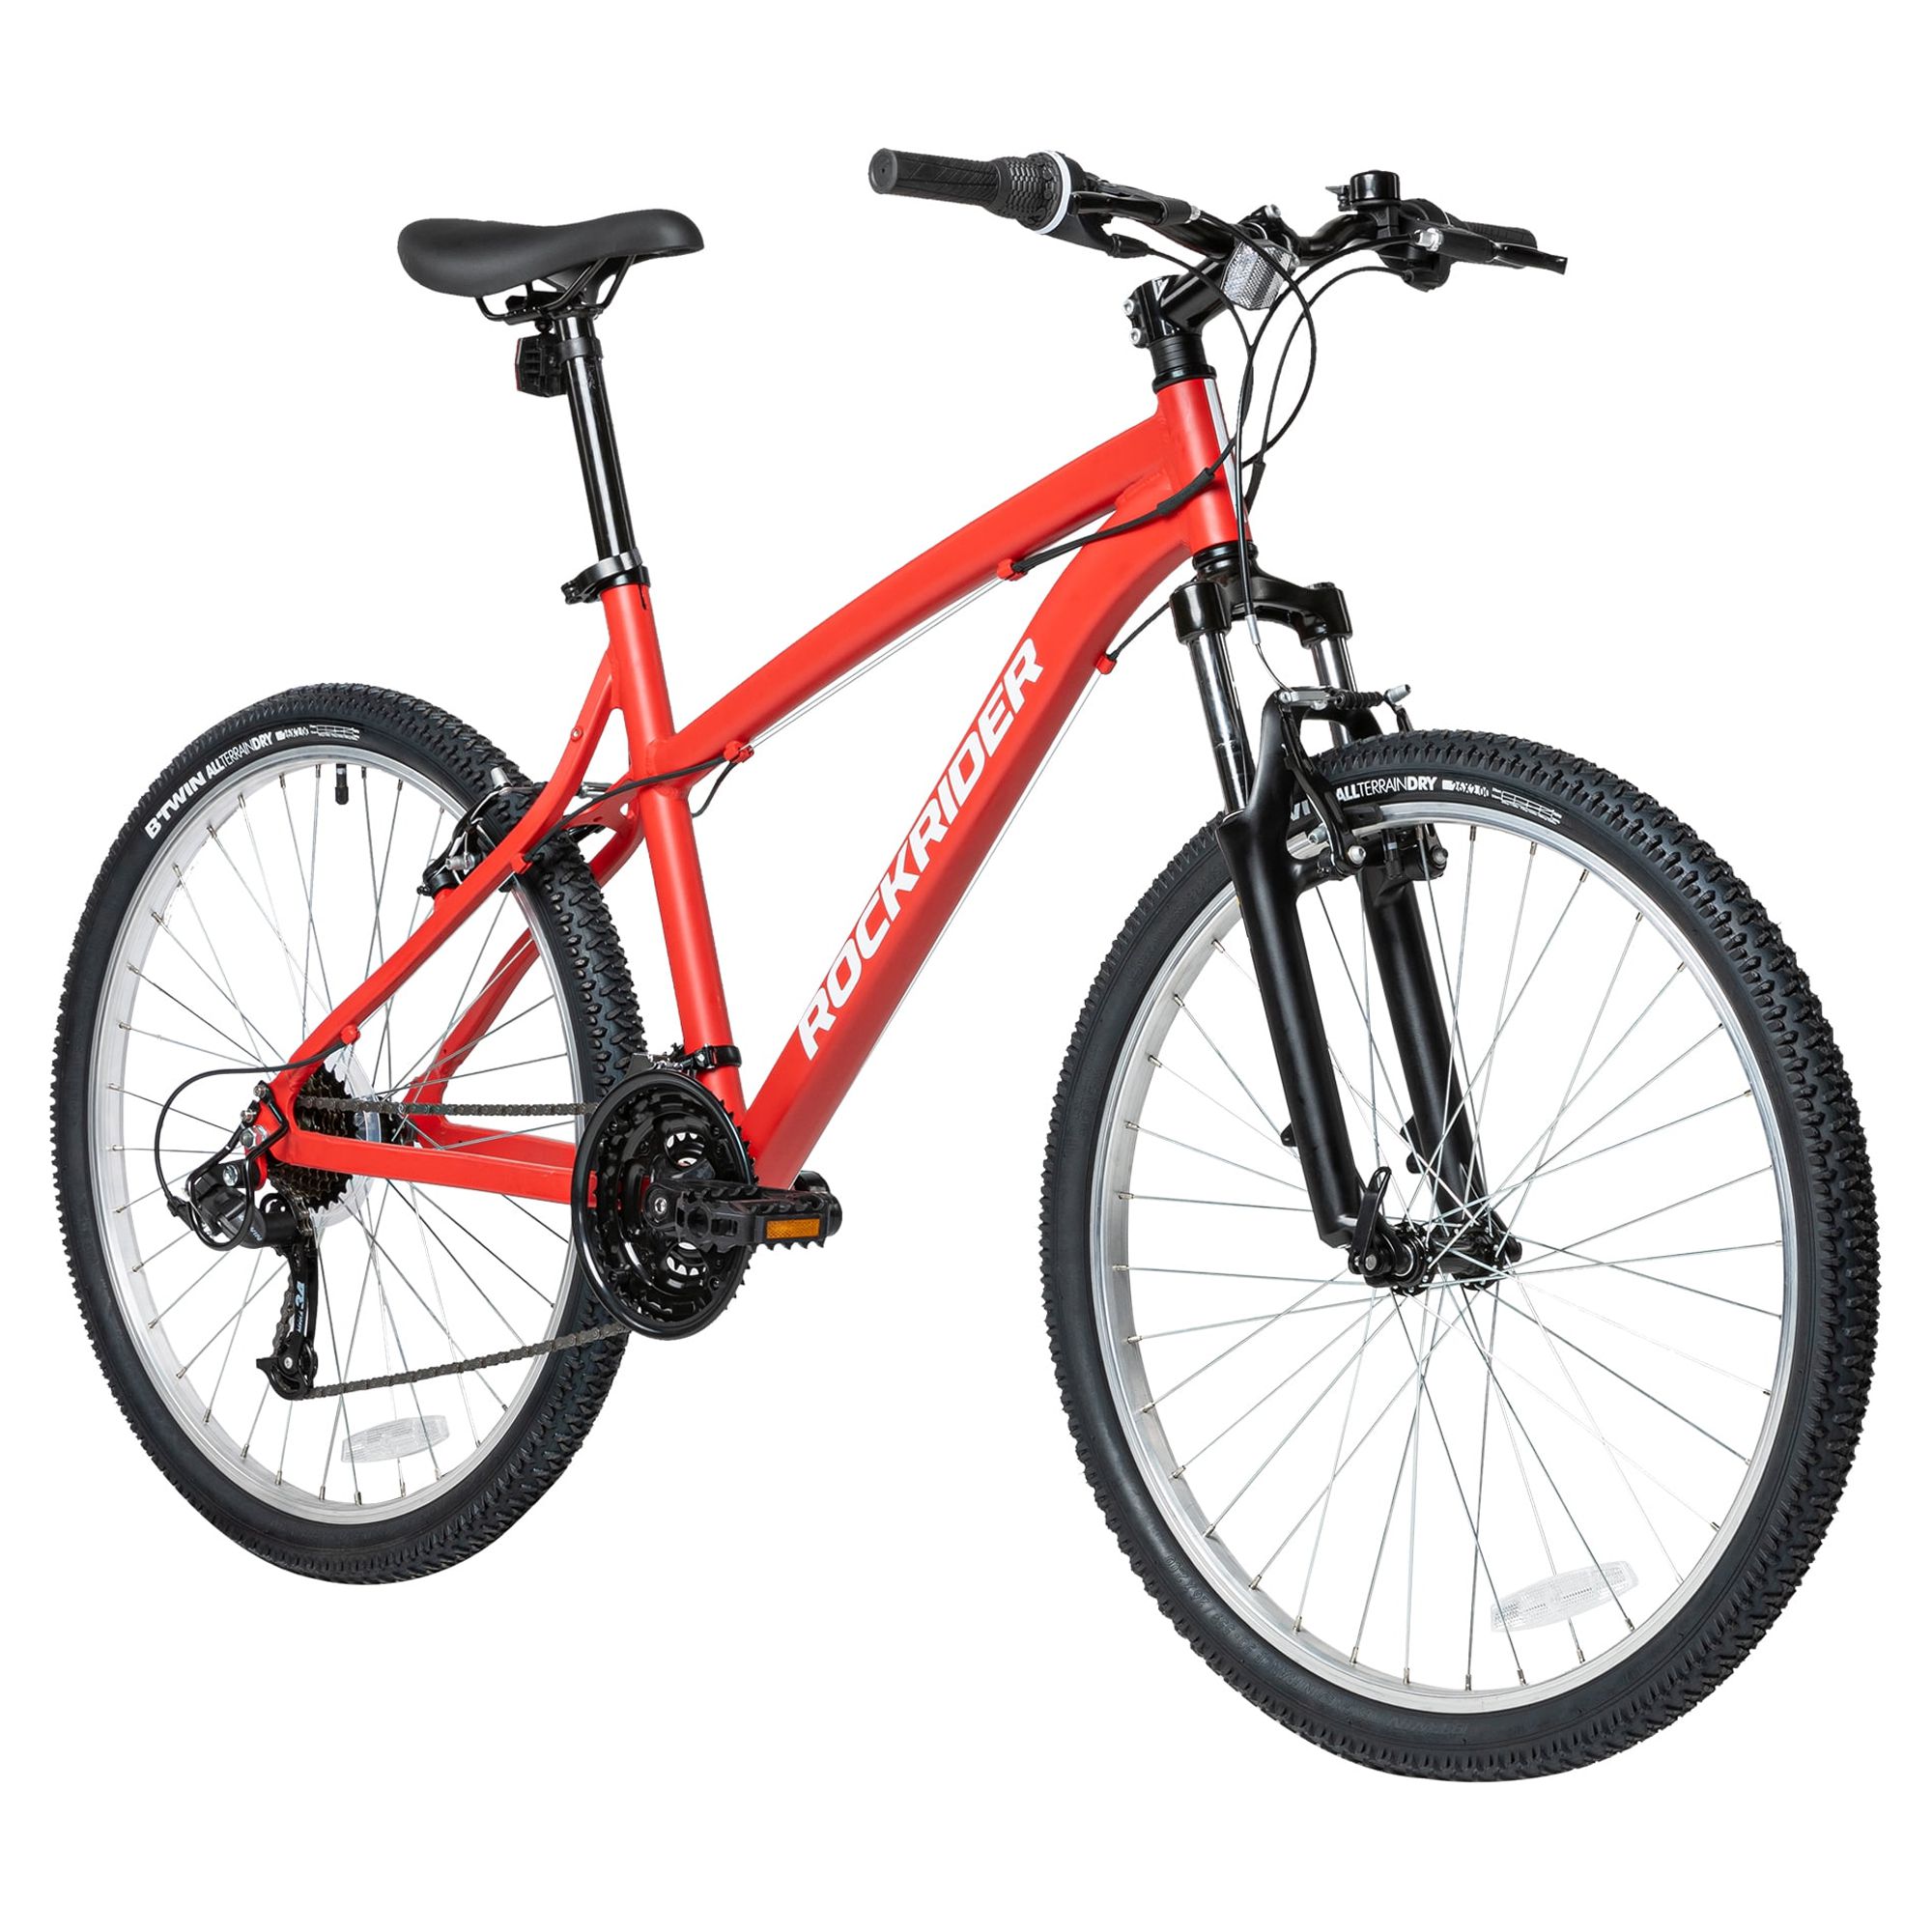 Decathlon Rockrider ST50, 21 Speed Aluminum Mountain Bike, 26", Unisex, Adult, Red, Medium - image 1 of 13